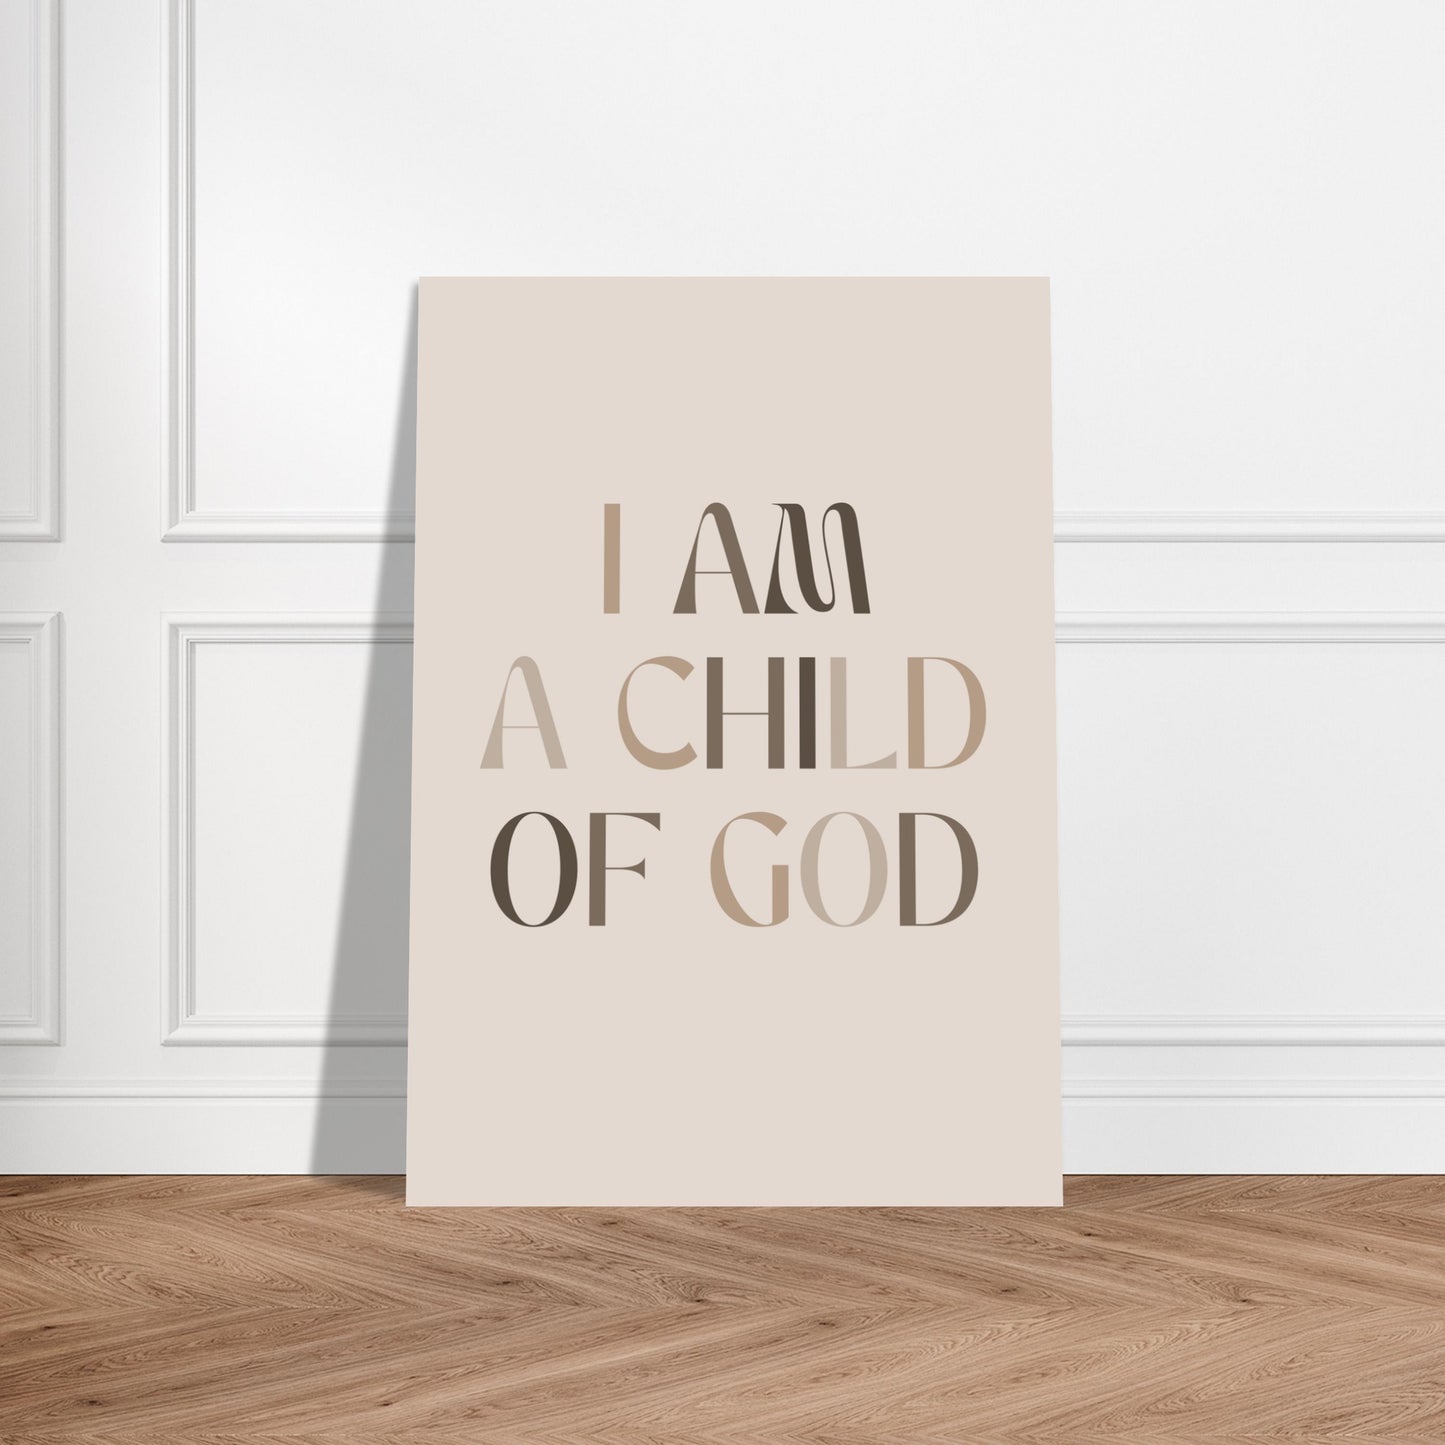 Affirmations Poster ”I am a child of god”